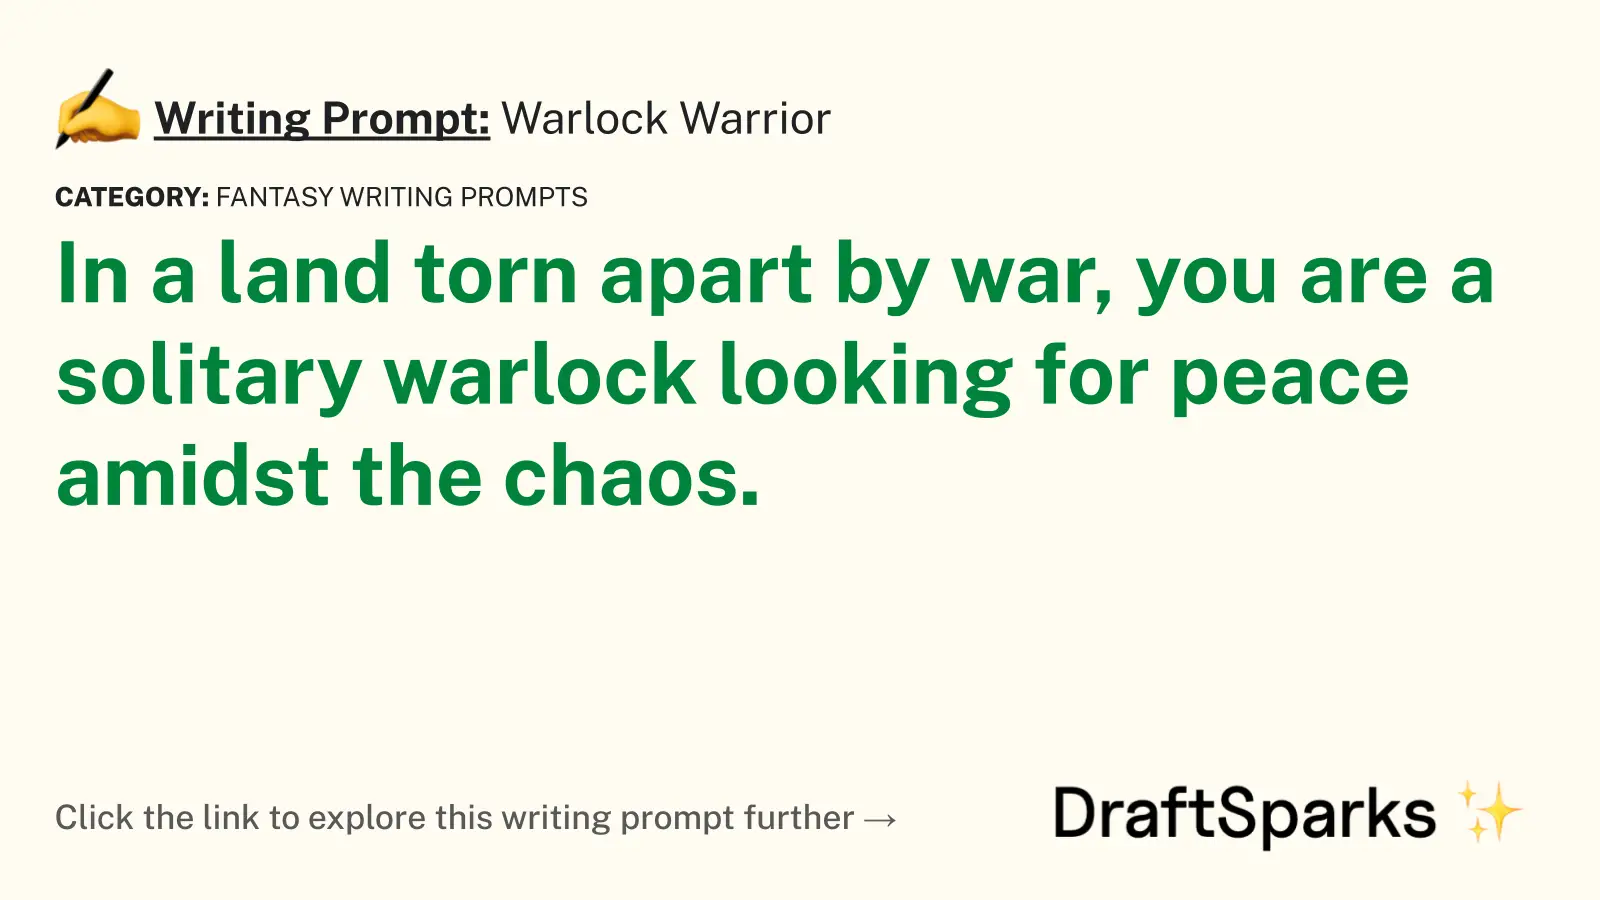 Warlock Warrior